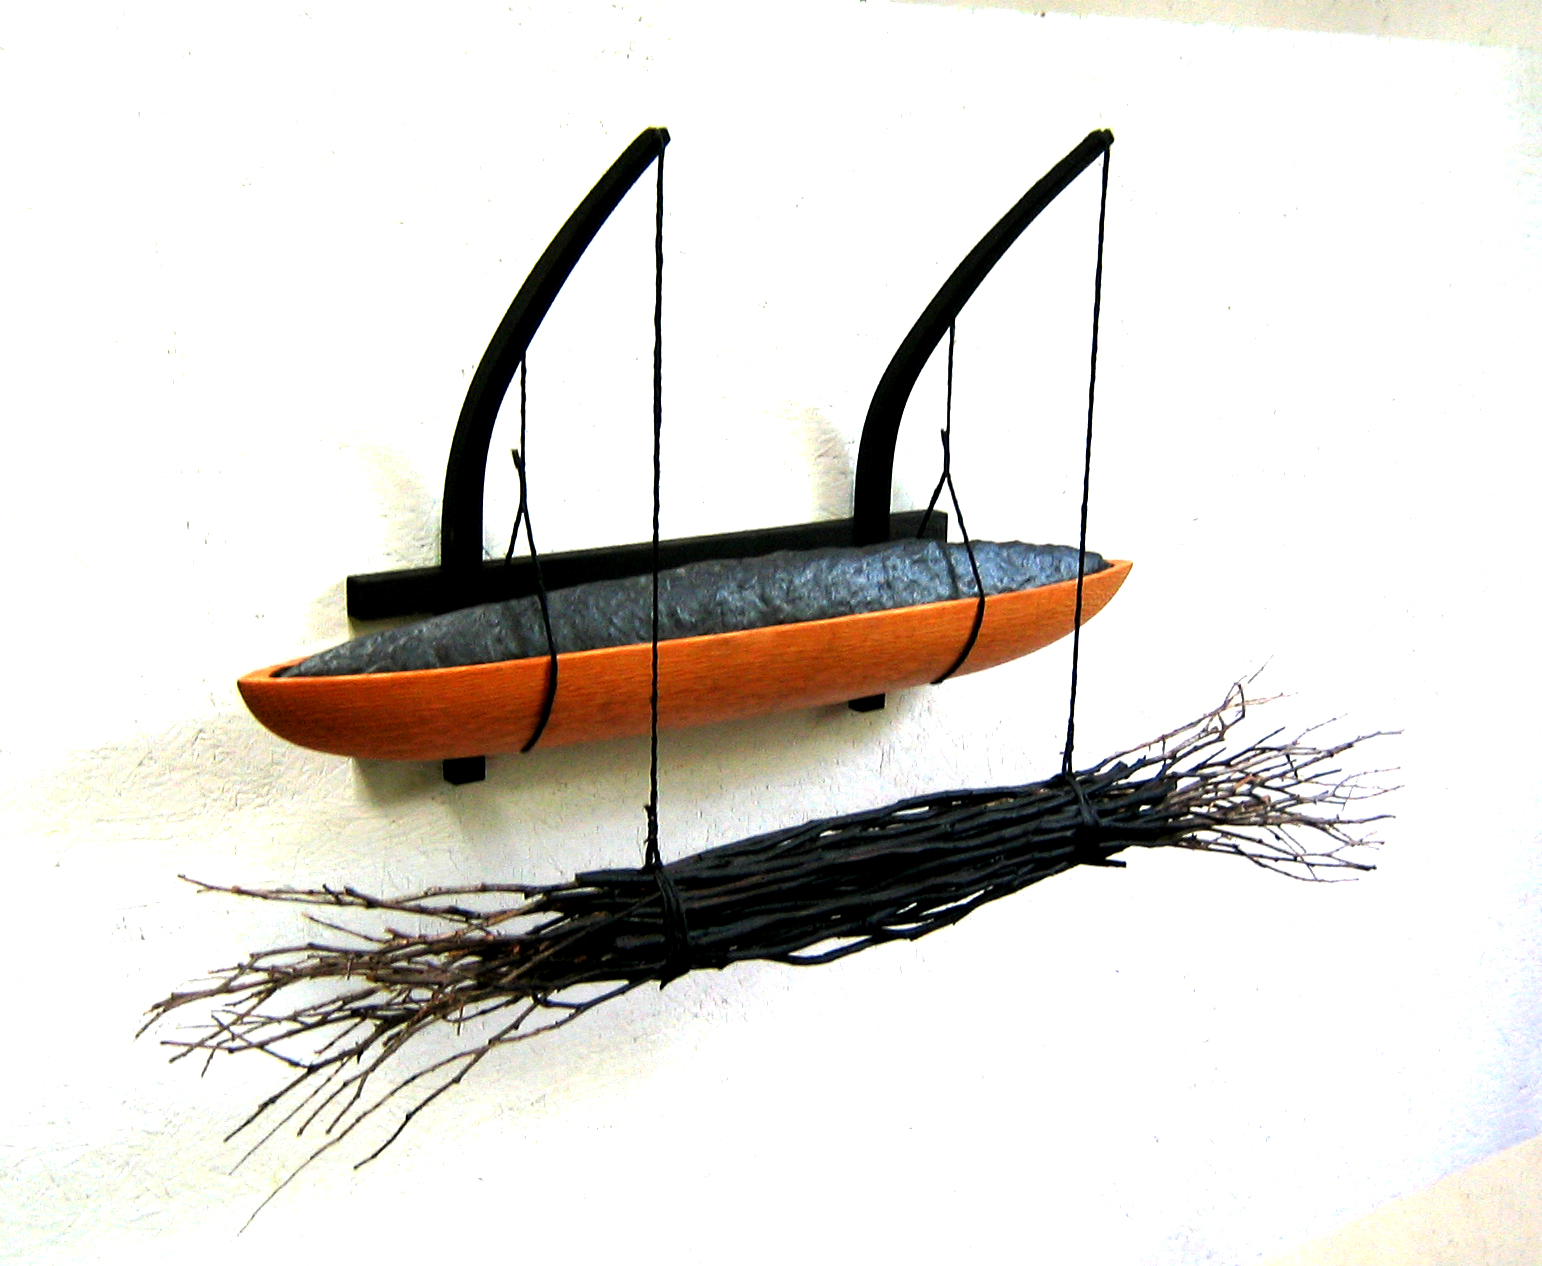 Boat of sticks-a.jpg